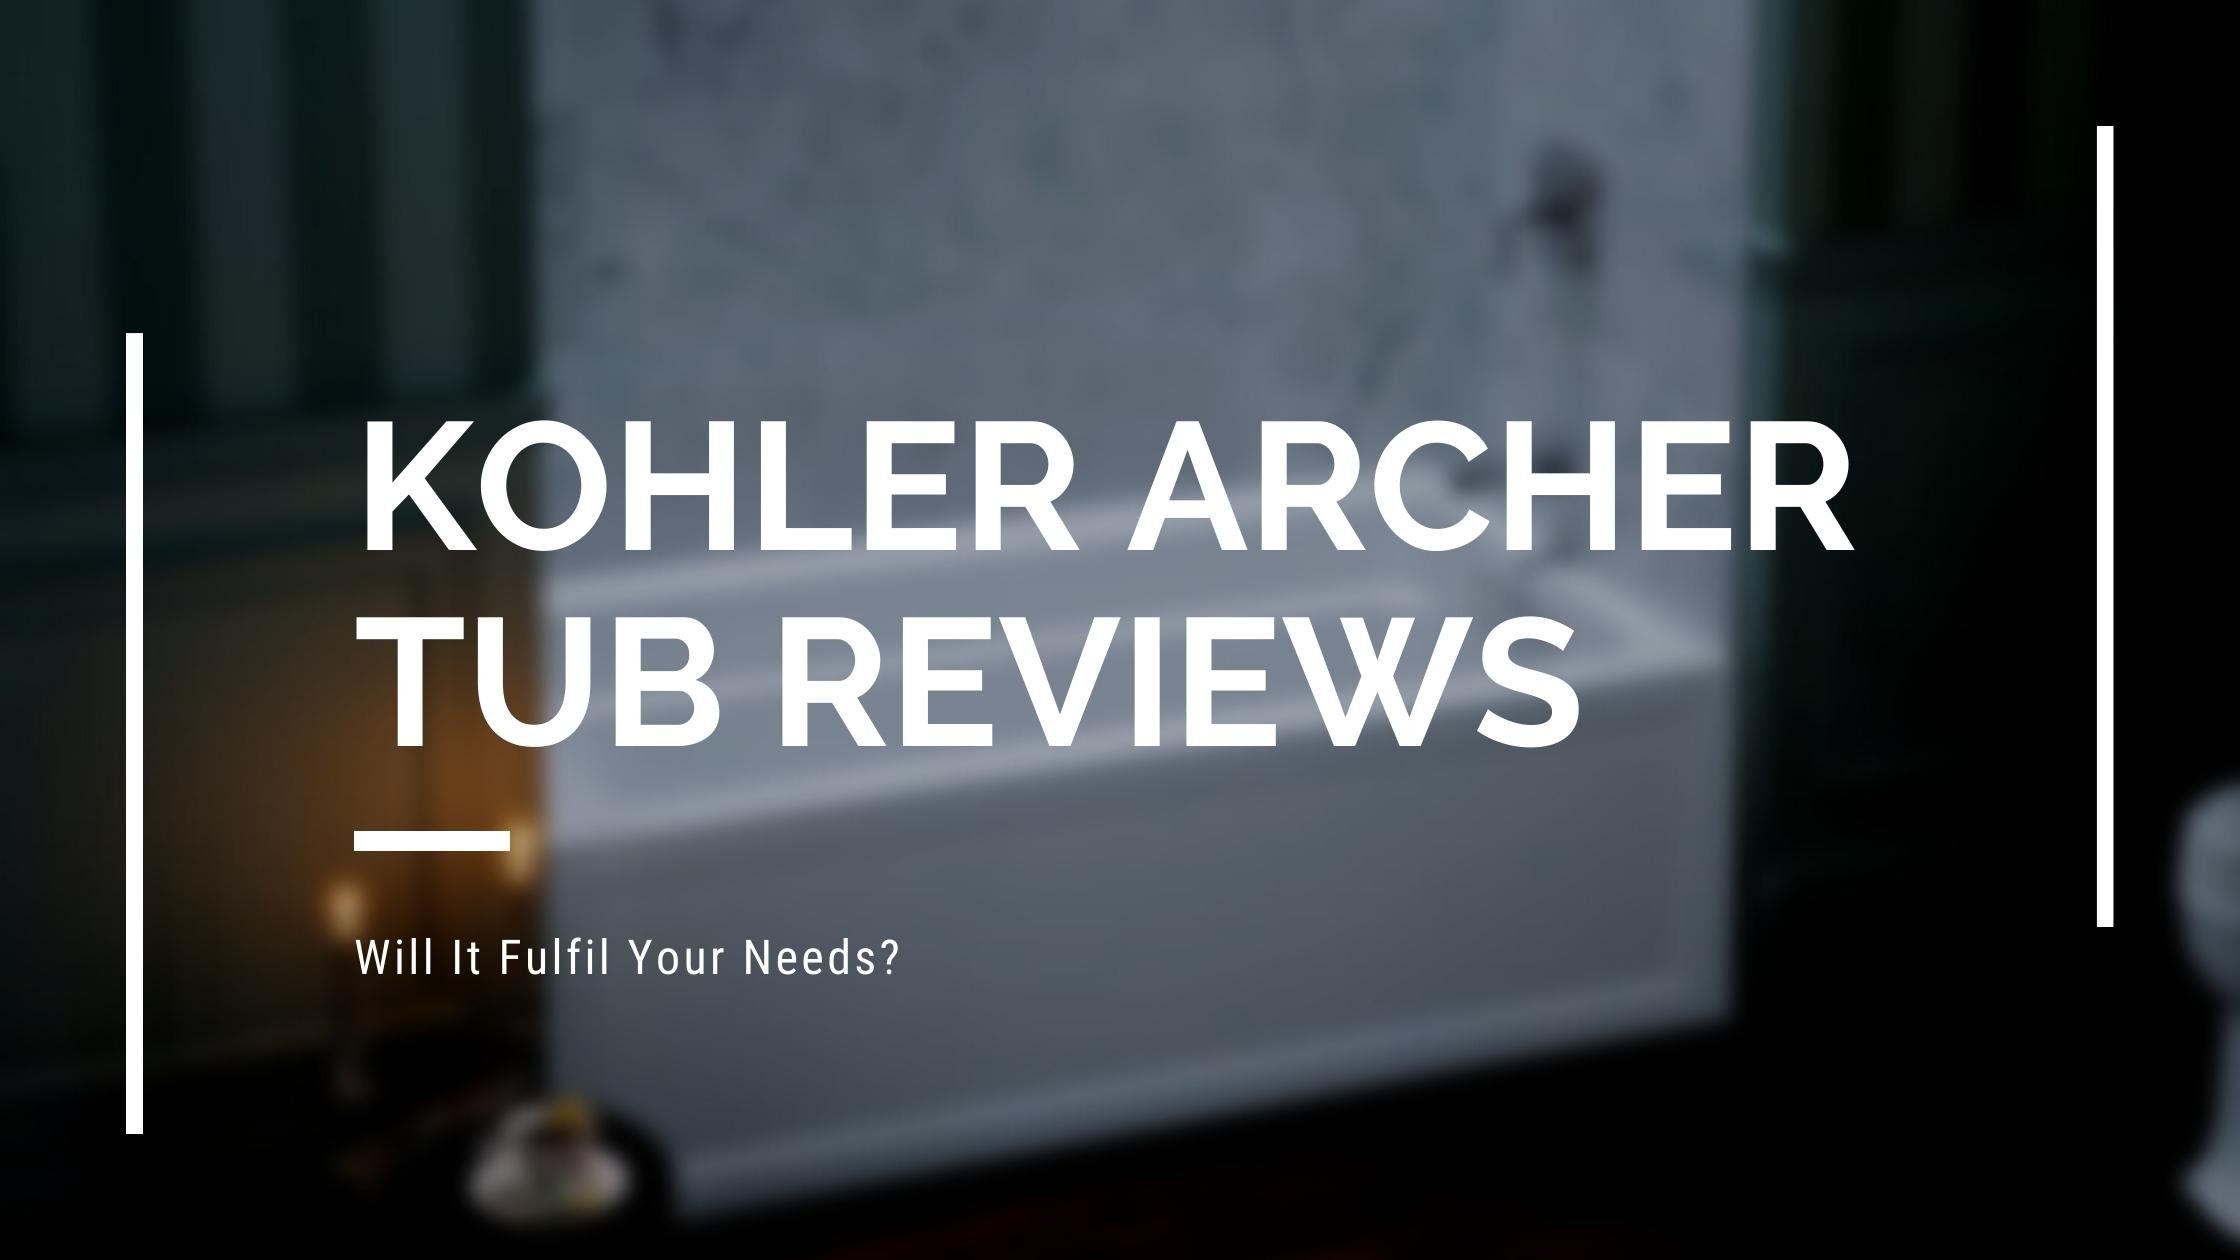 Kohler Archer Tub Reviews